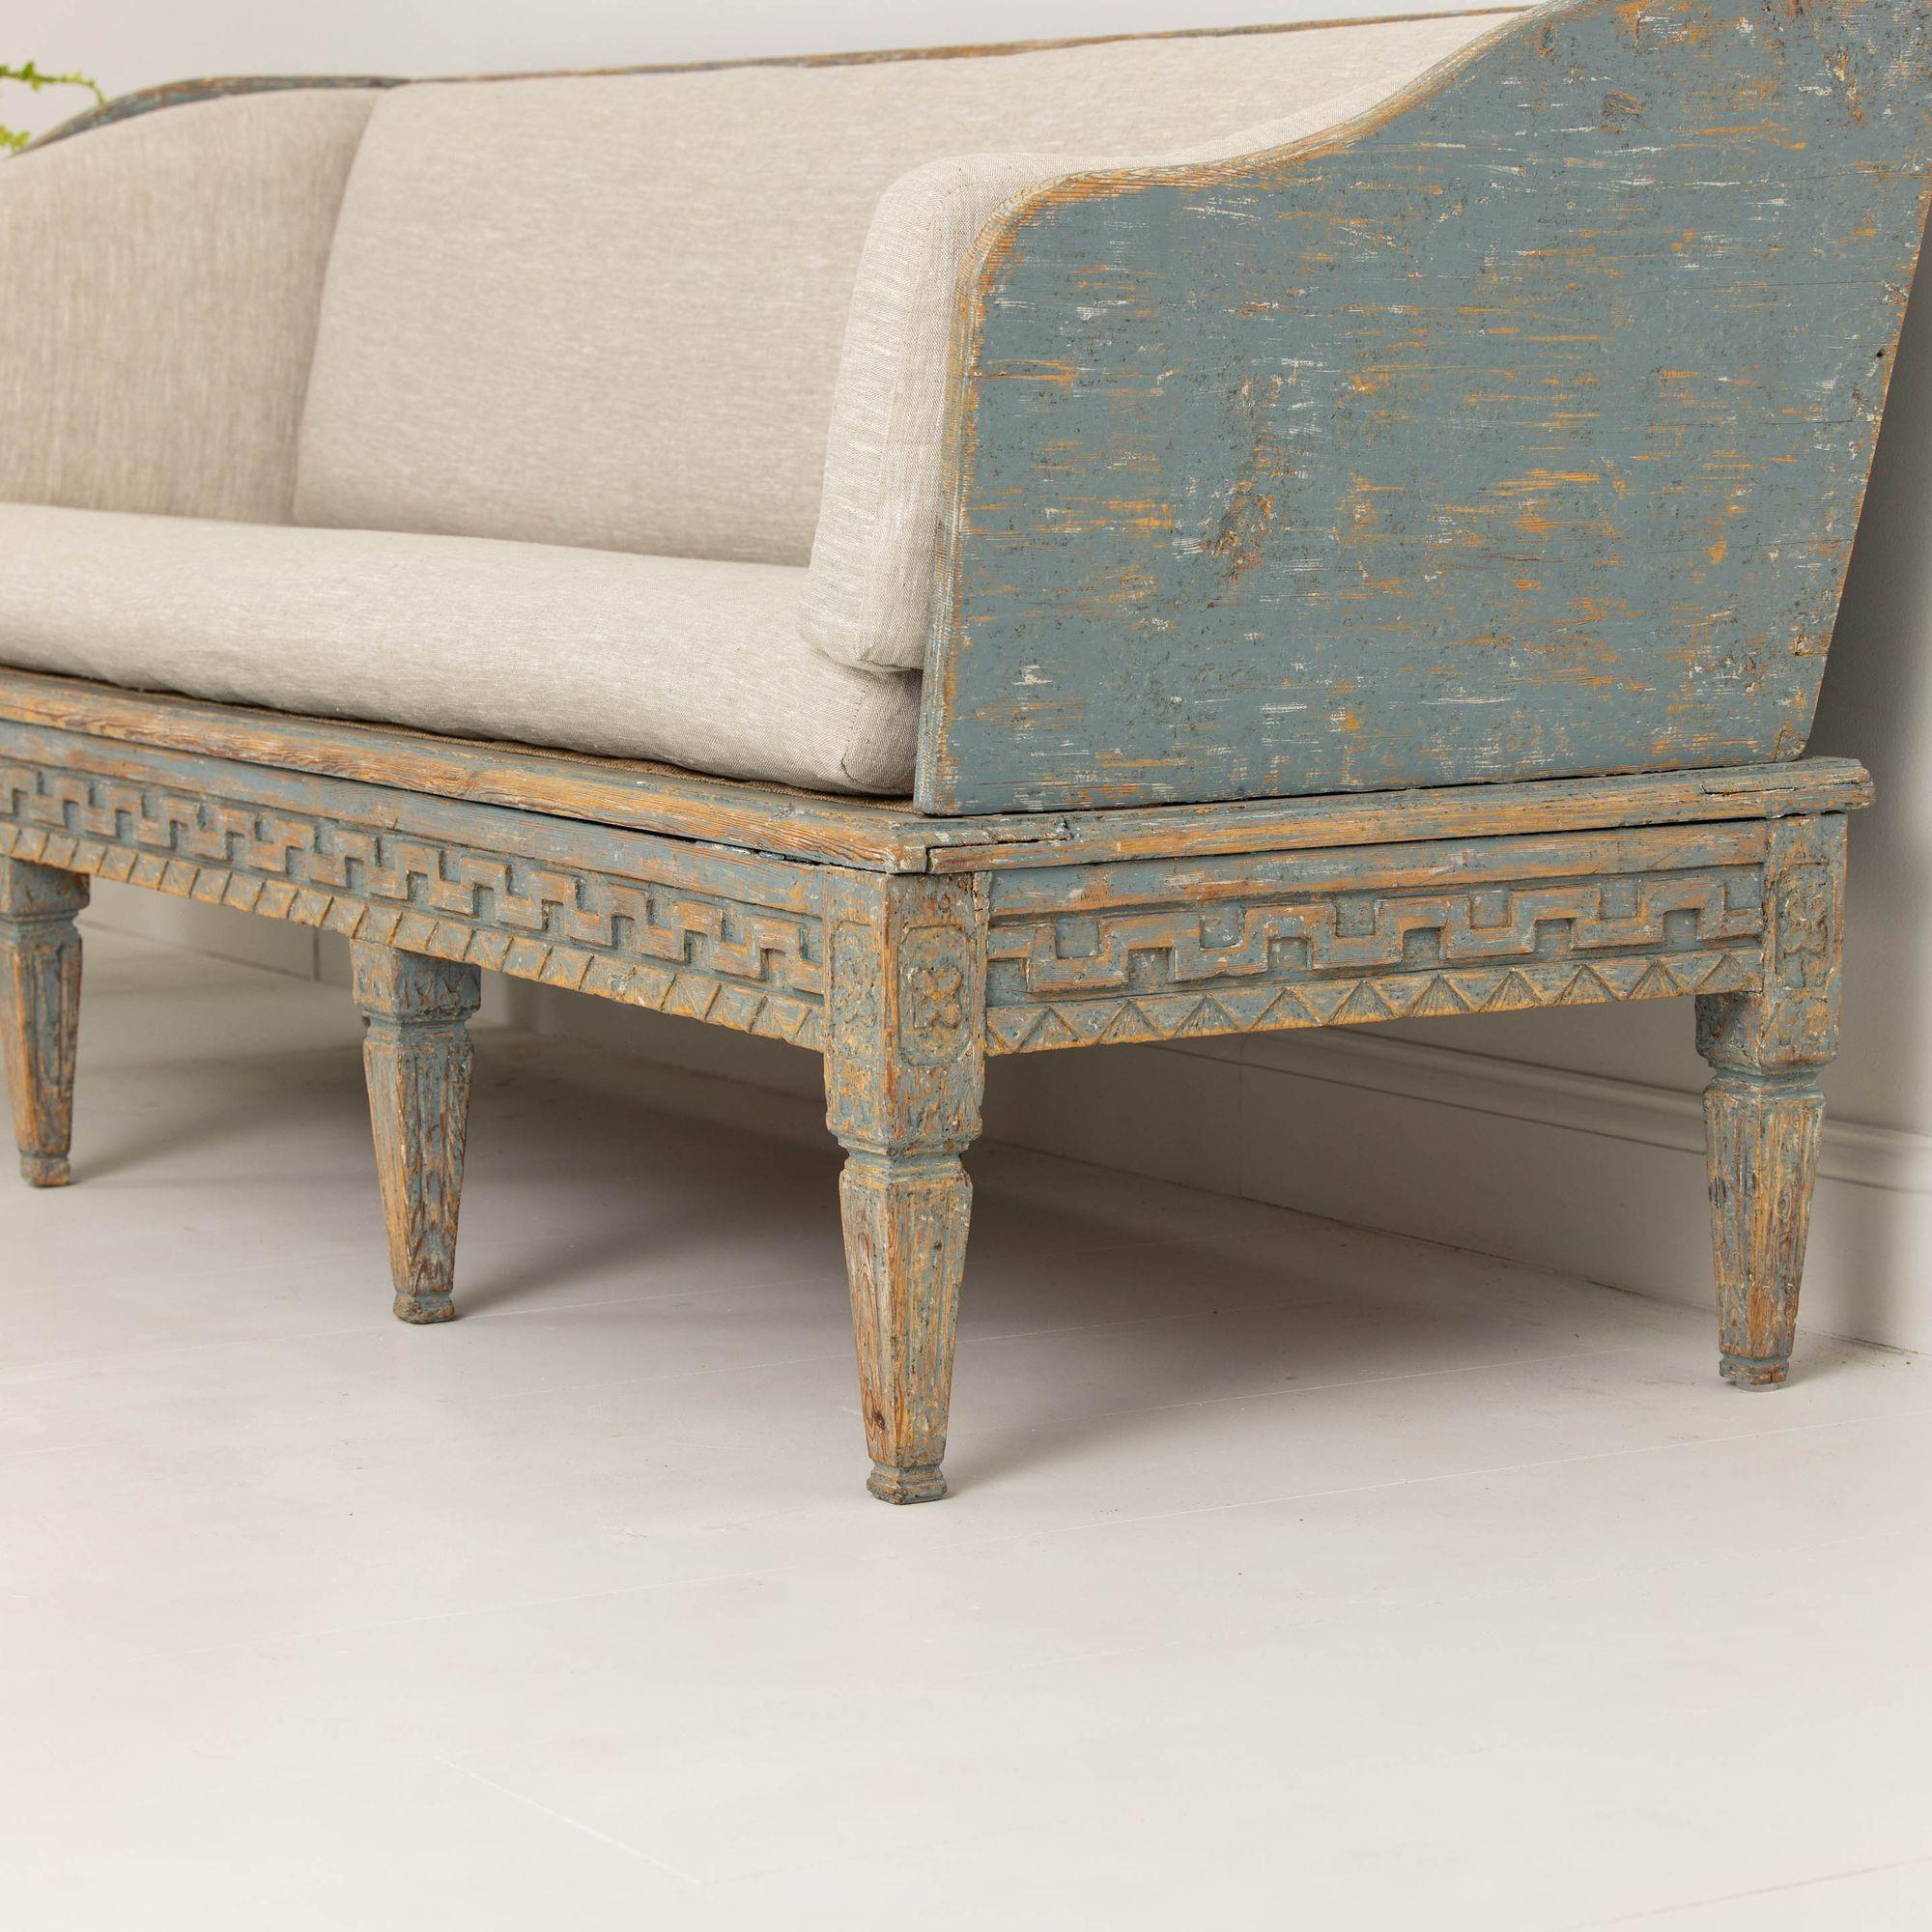 18th c. Swedish Gustavian Period Painted Sofa 'Trägsoffa' For Sale 9